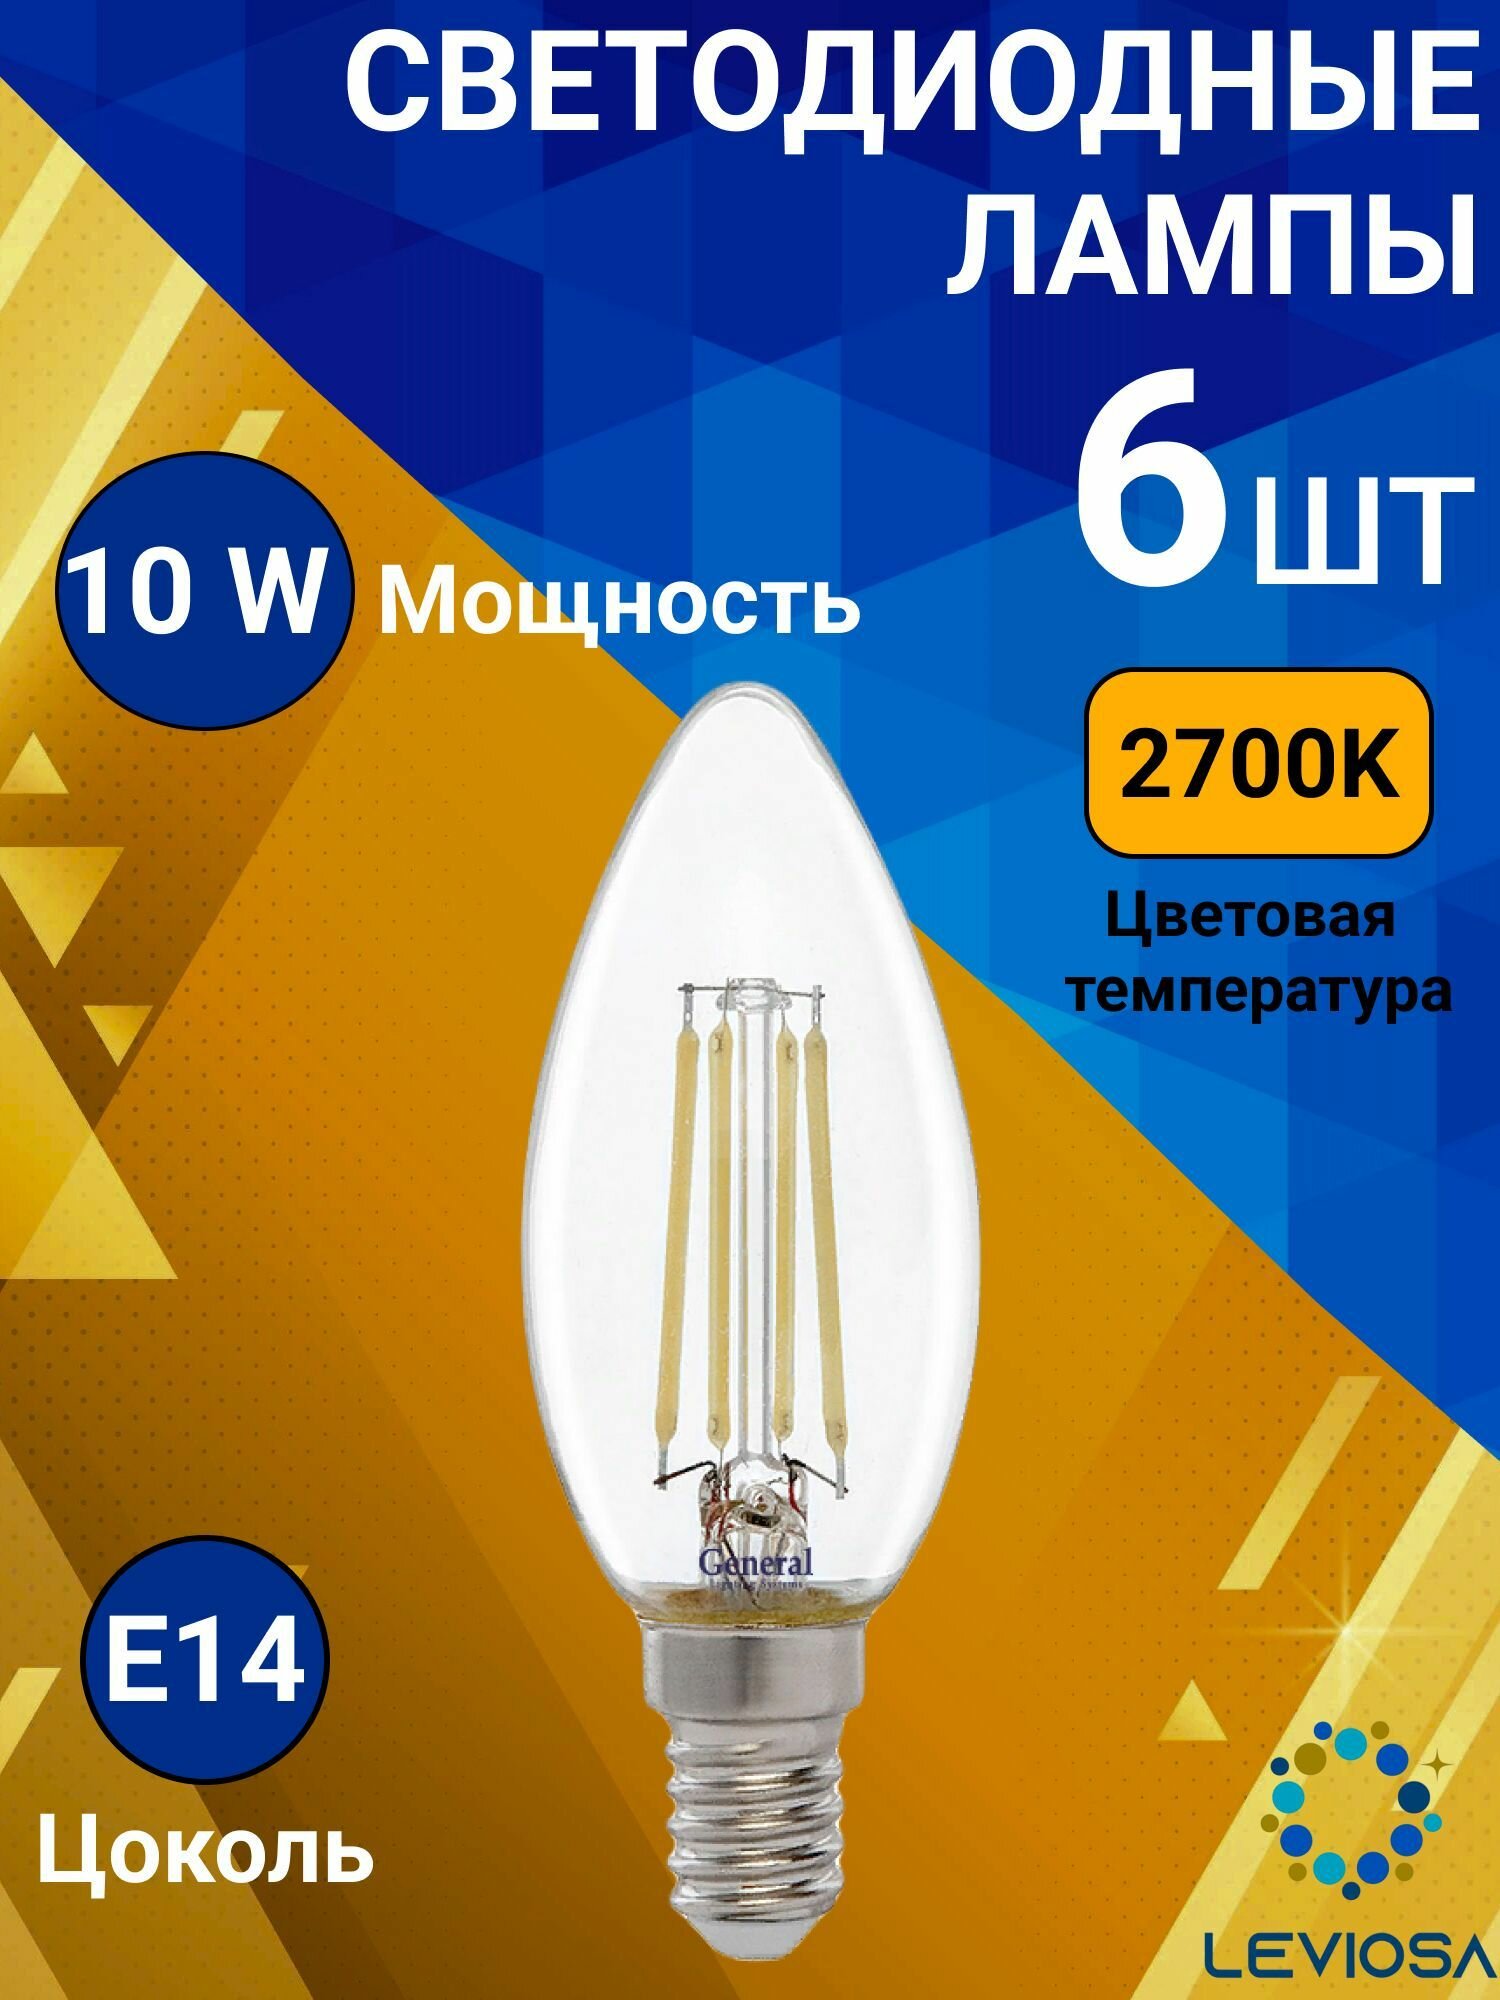 General, Лампа светодиодная филаментная, Комплект из 6 шт, 10 Вт, Цоколь E14, 2700К, Форма лампы Свеча